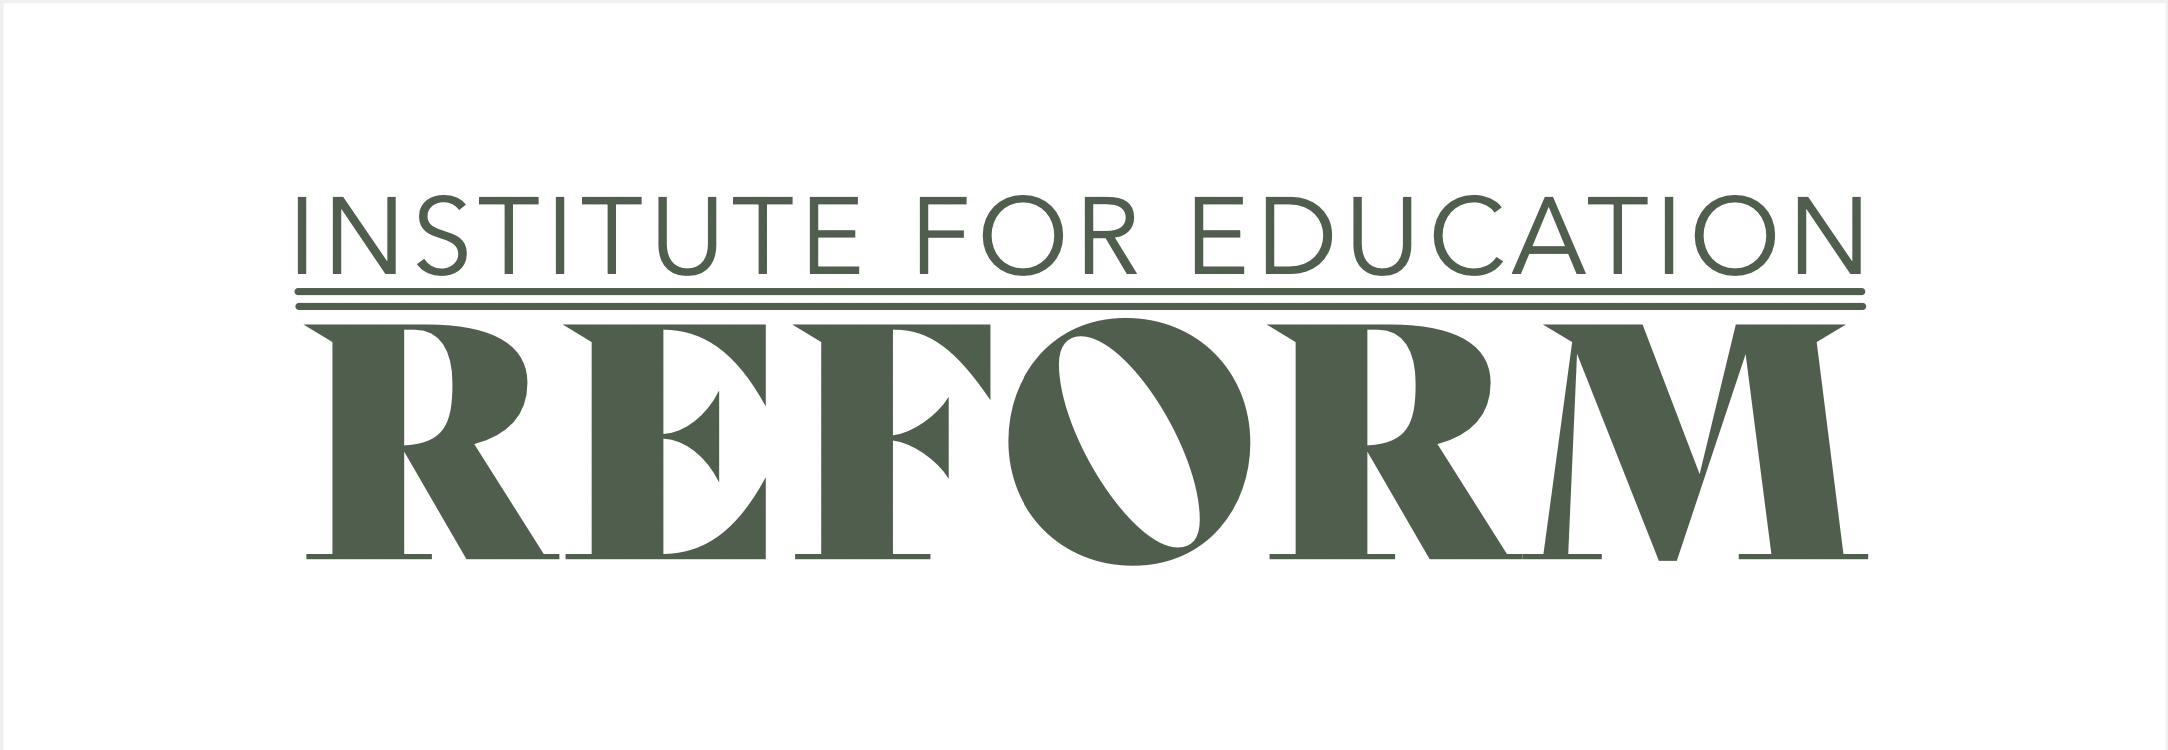 Institute for Education Reform